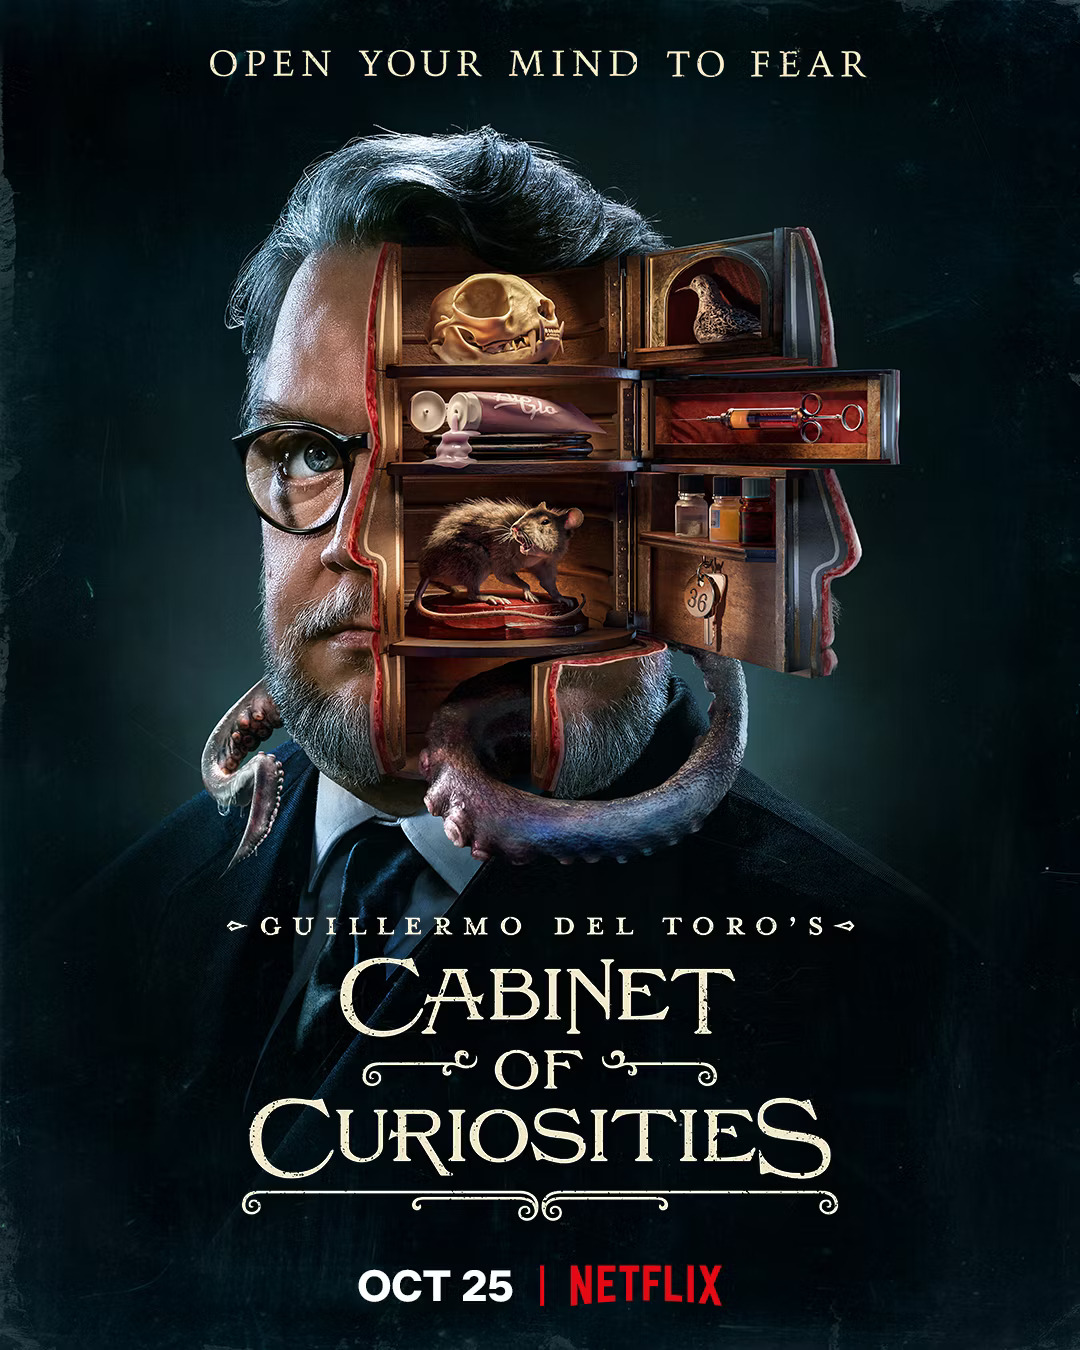 Guillermo del Toro’s Cabinet of Curiosities Season 1 Episode 4